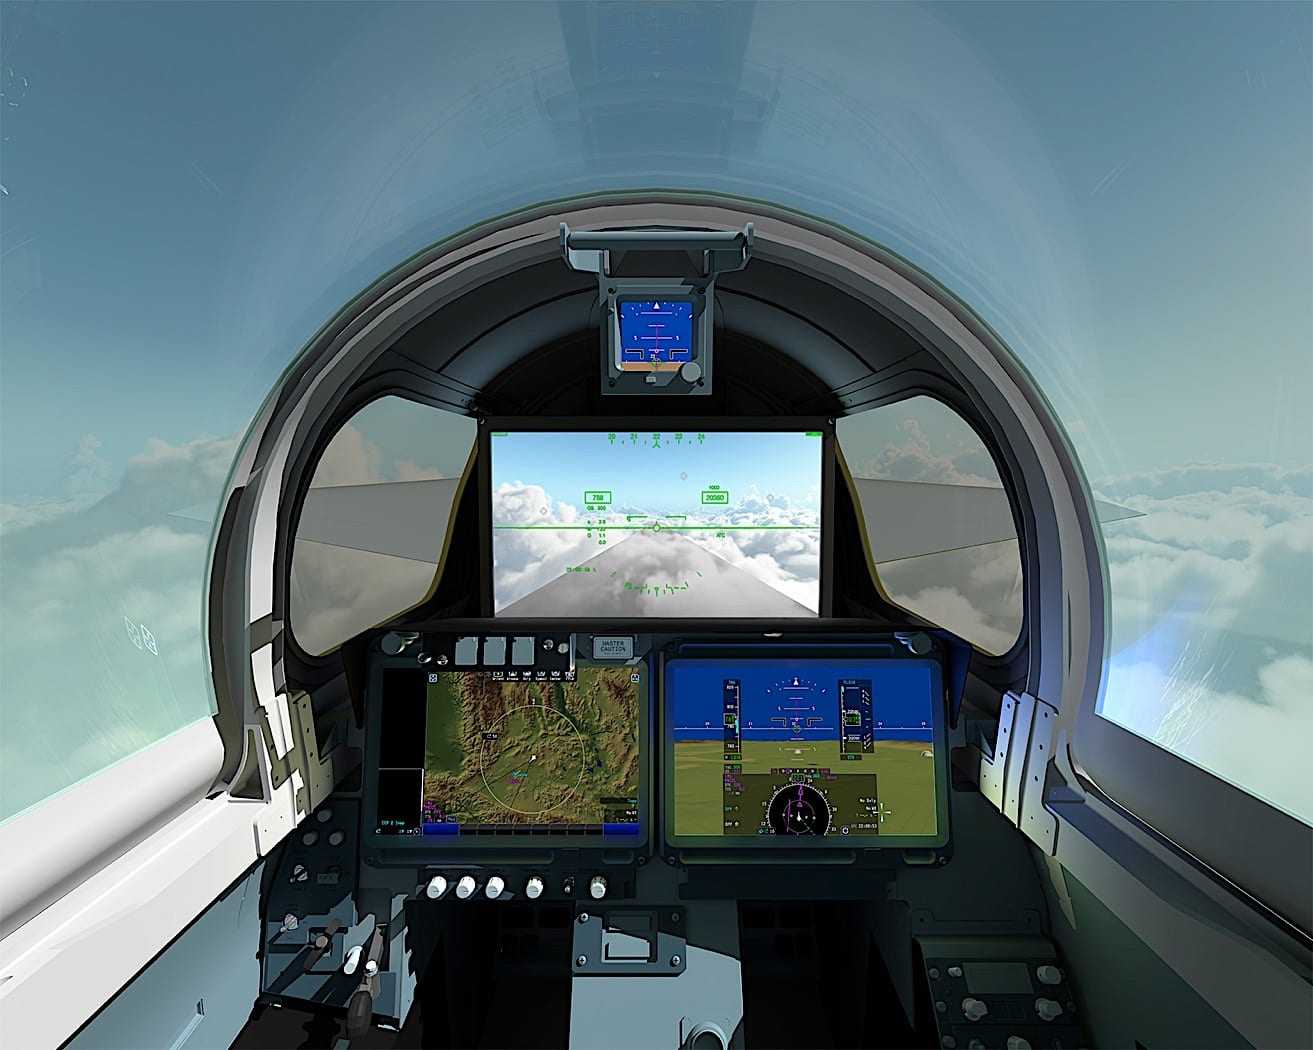 X-59 QueSST Supersonic Airplane Cockpit